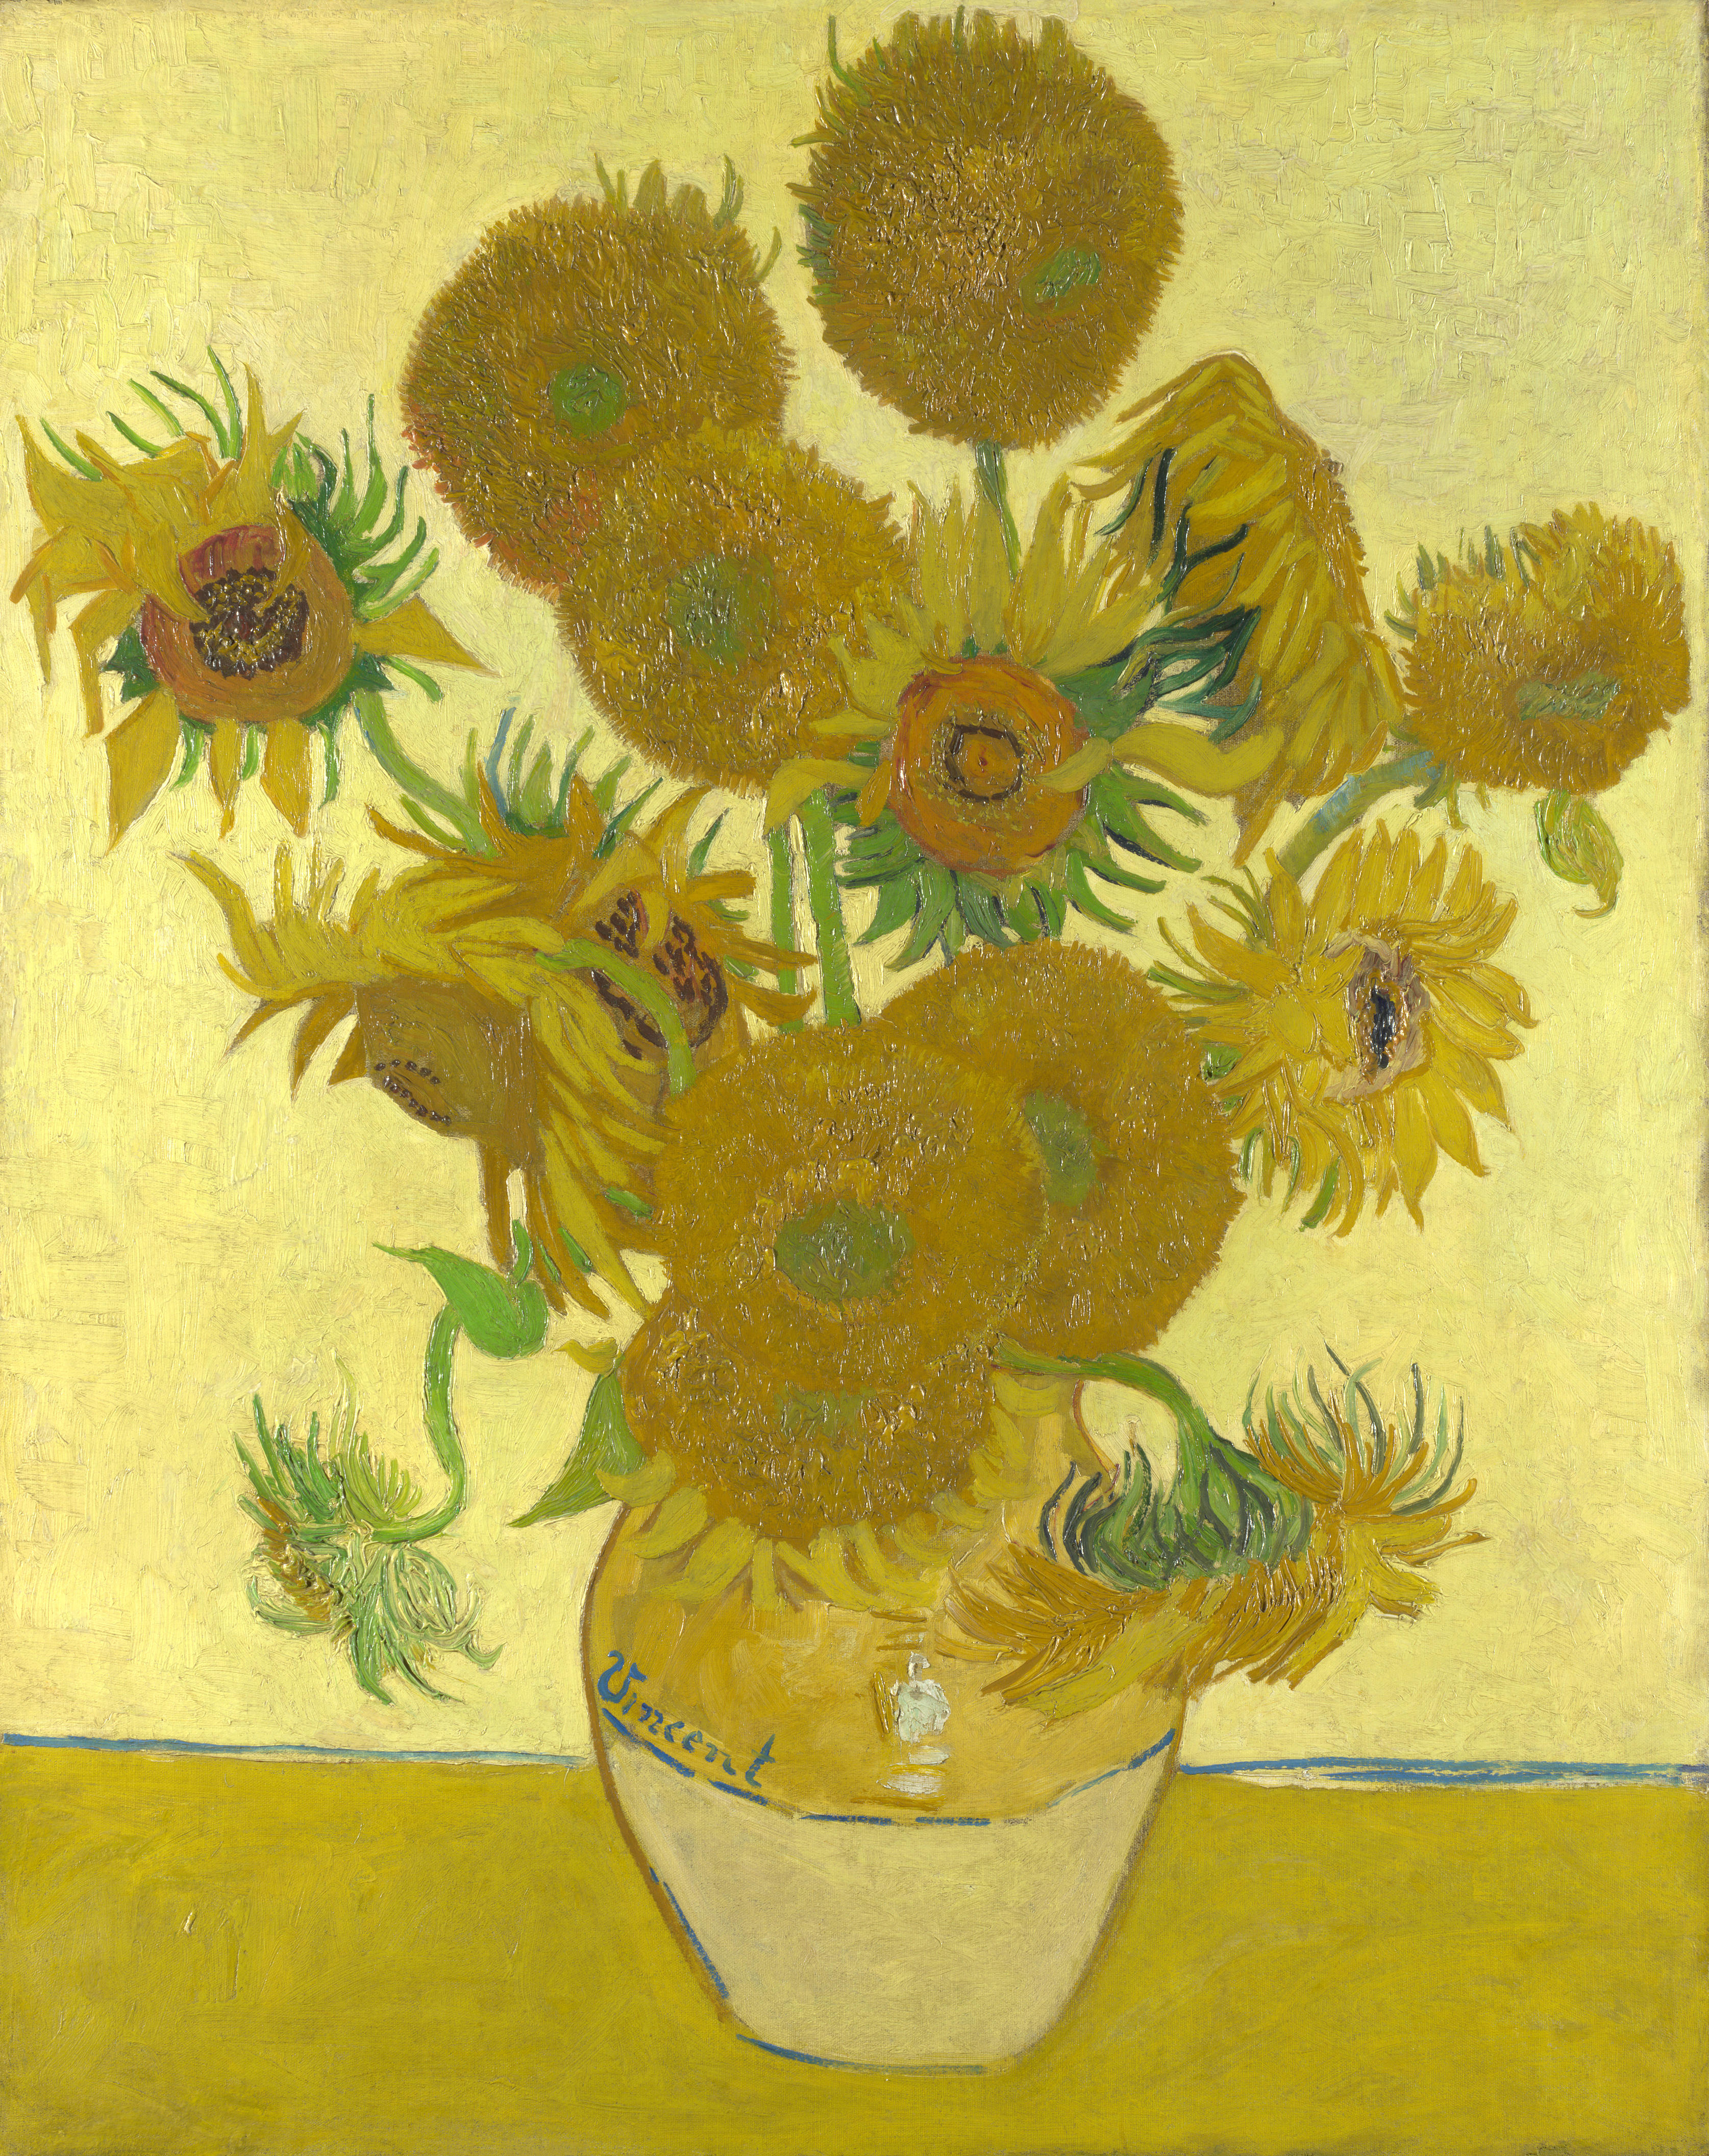 File:Vincent Willem van Gogh 127.jpg - Wikimedia Commons